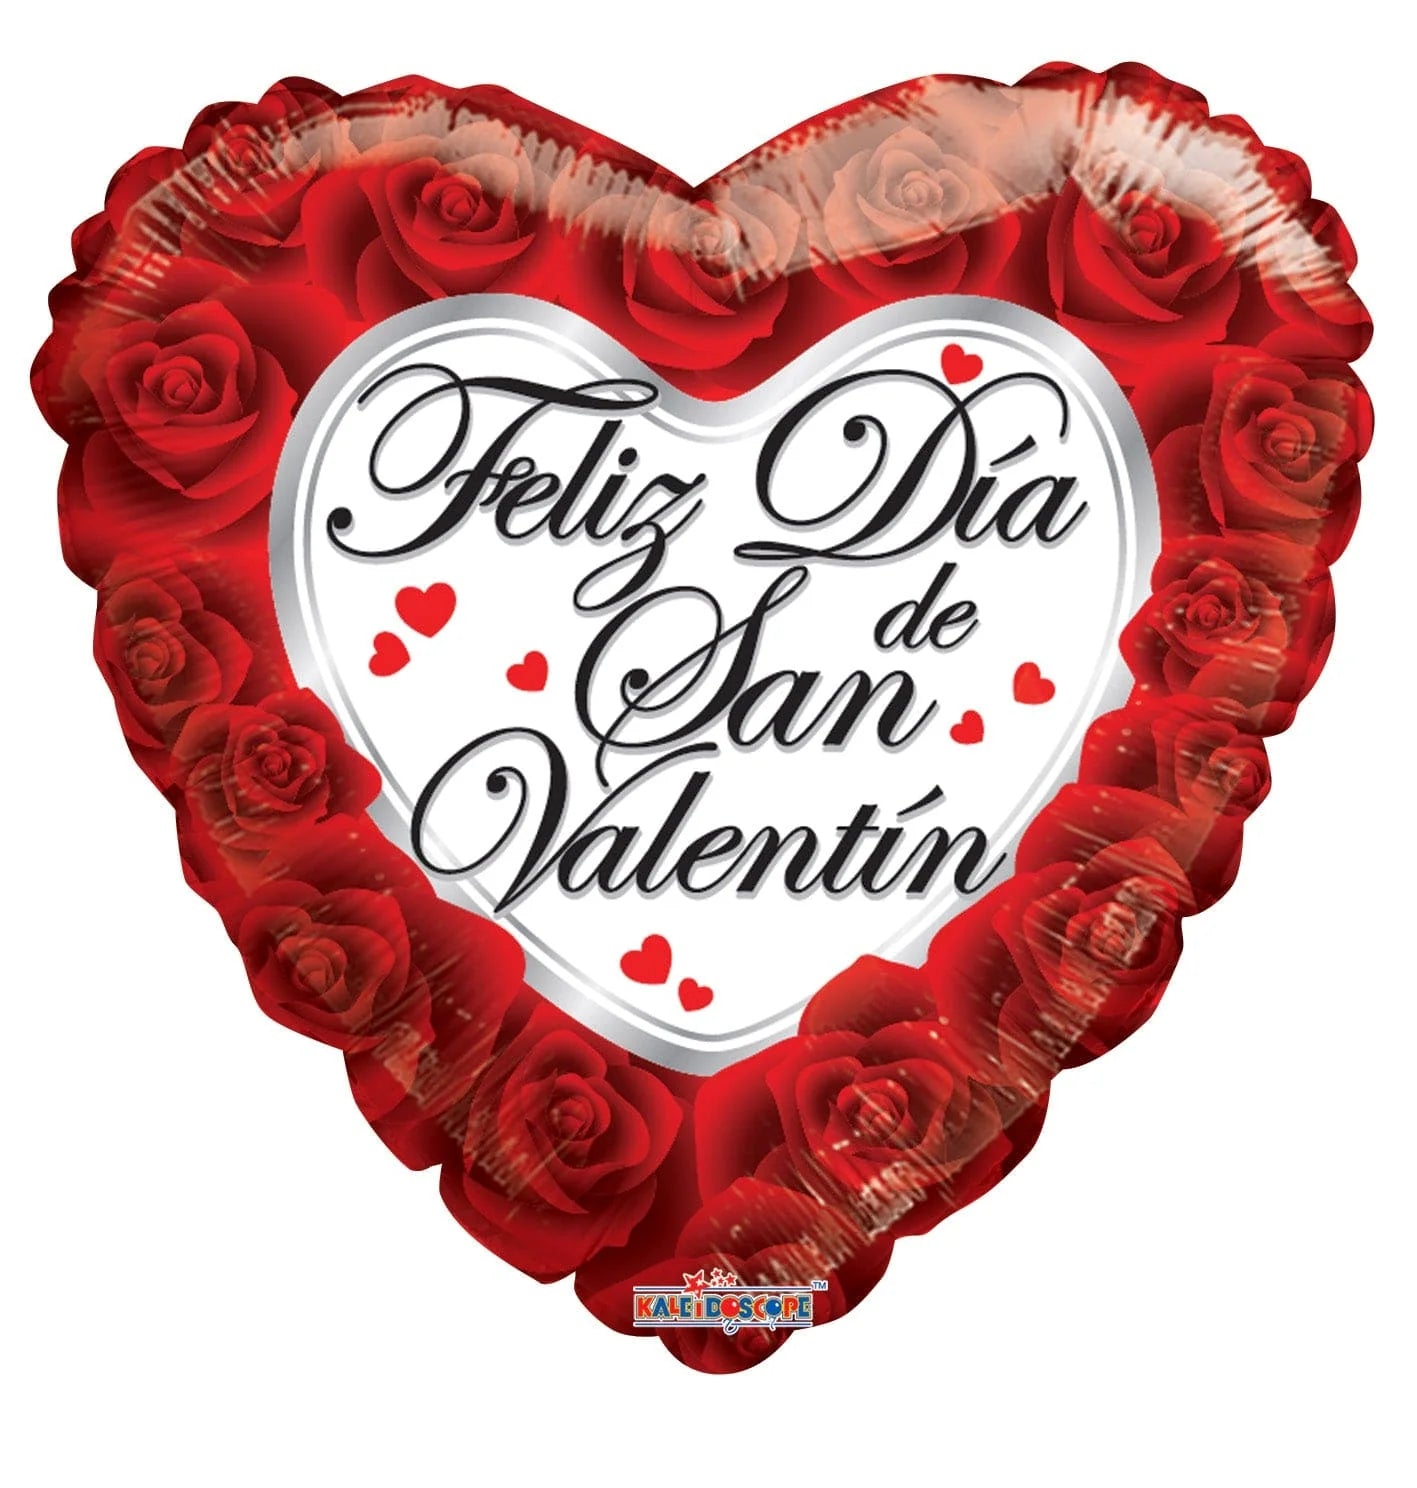 81224 - 18 Feliz Dia San Valentin SPANISH